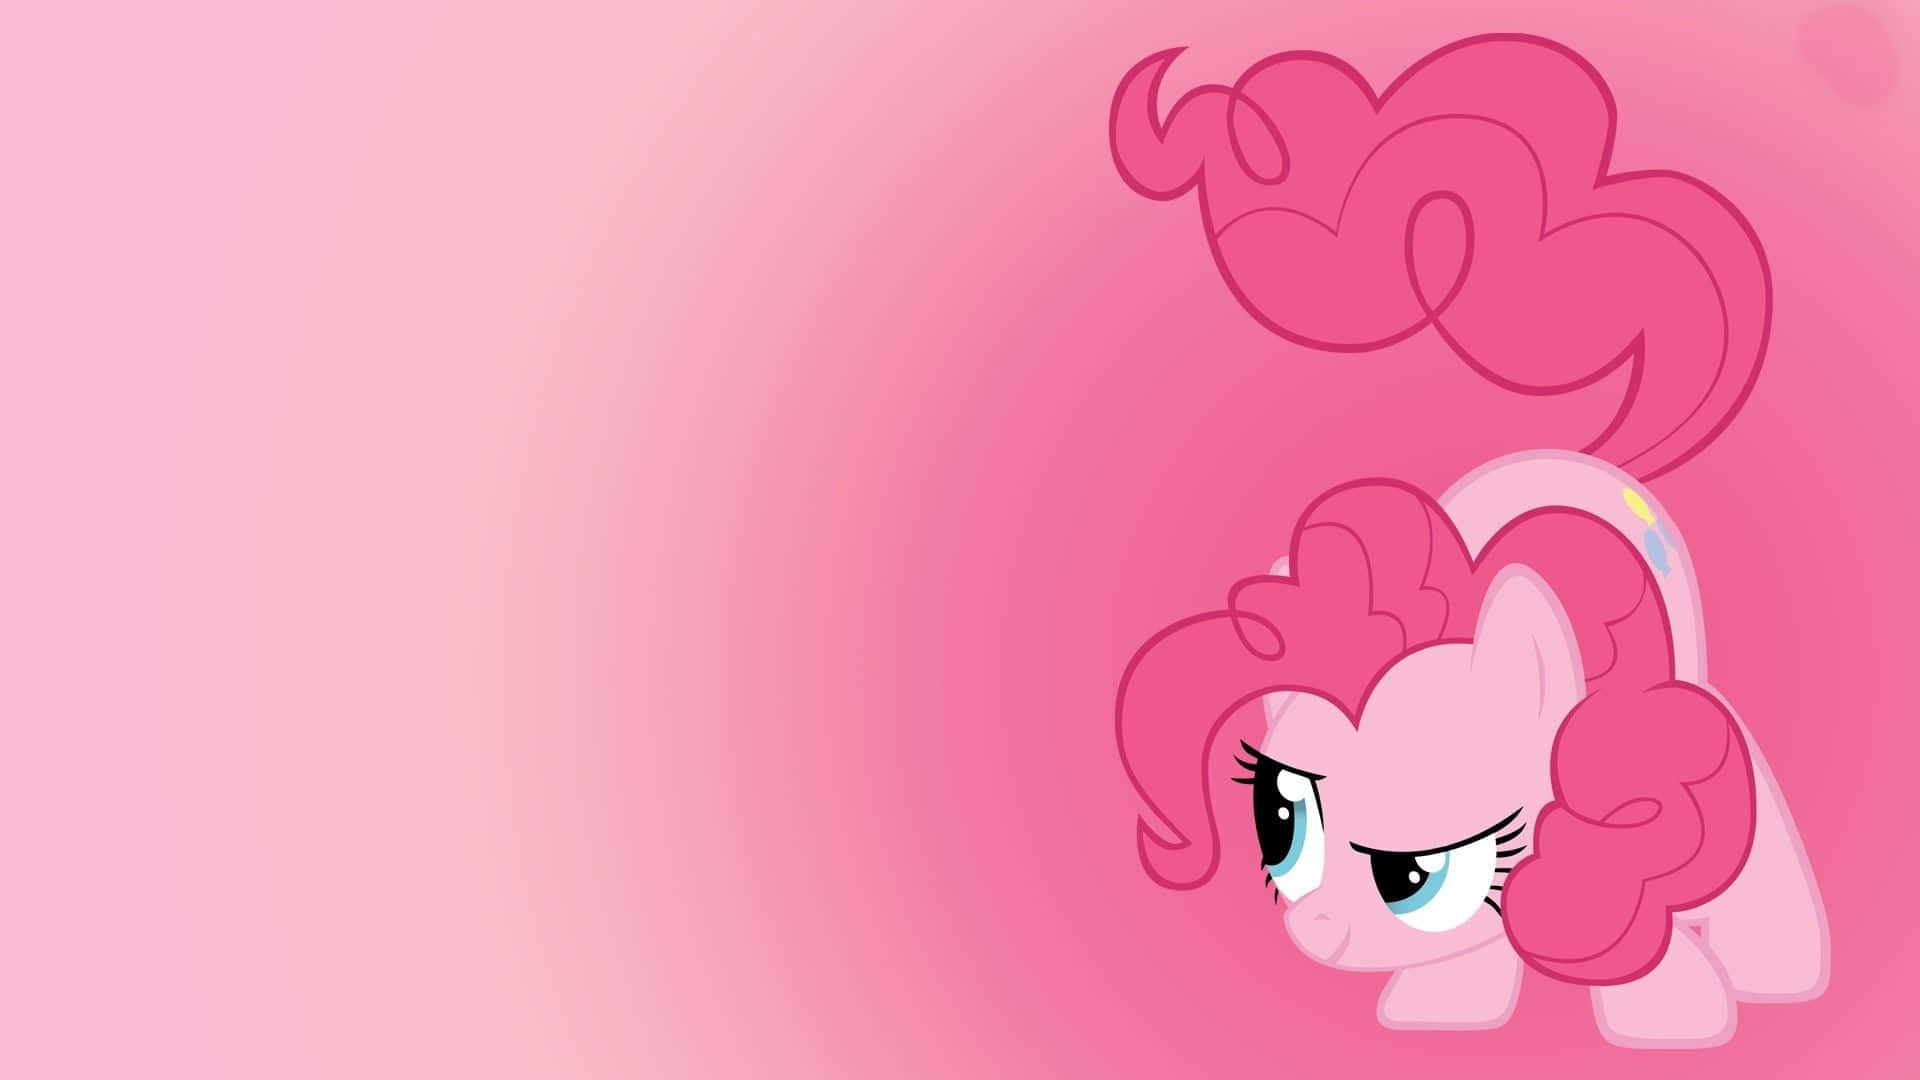 "Cuteness overload, it's Pinkie Pie!"